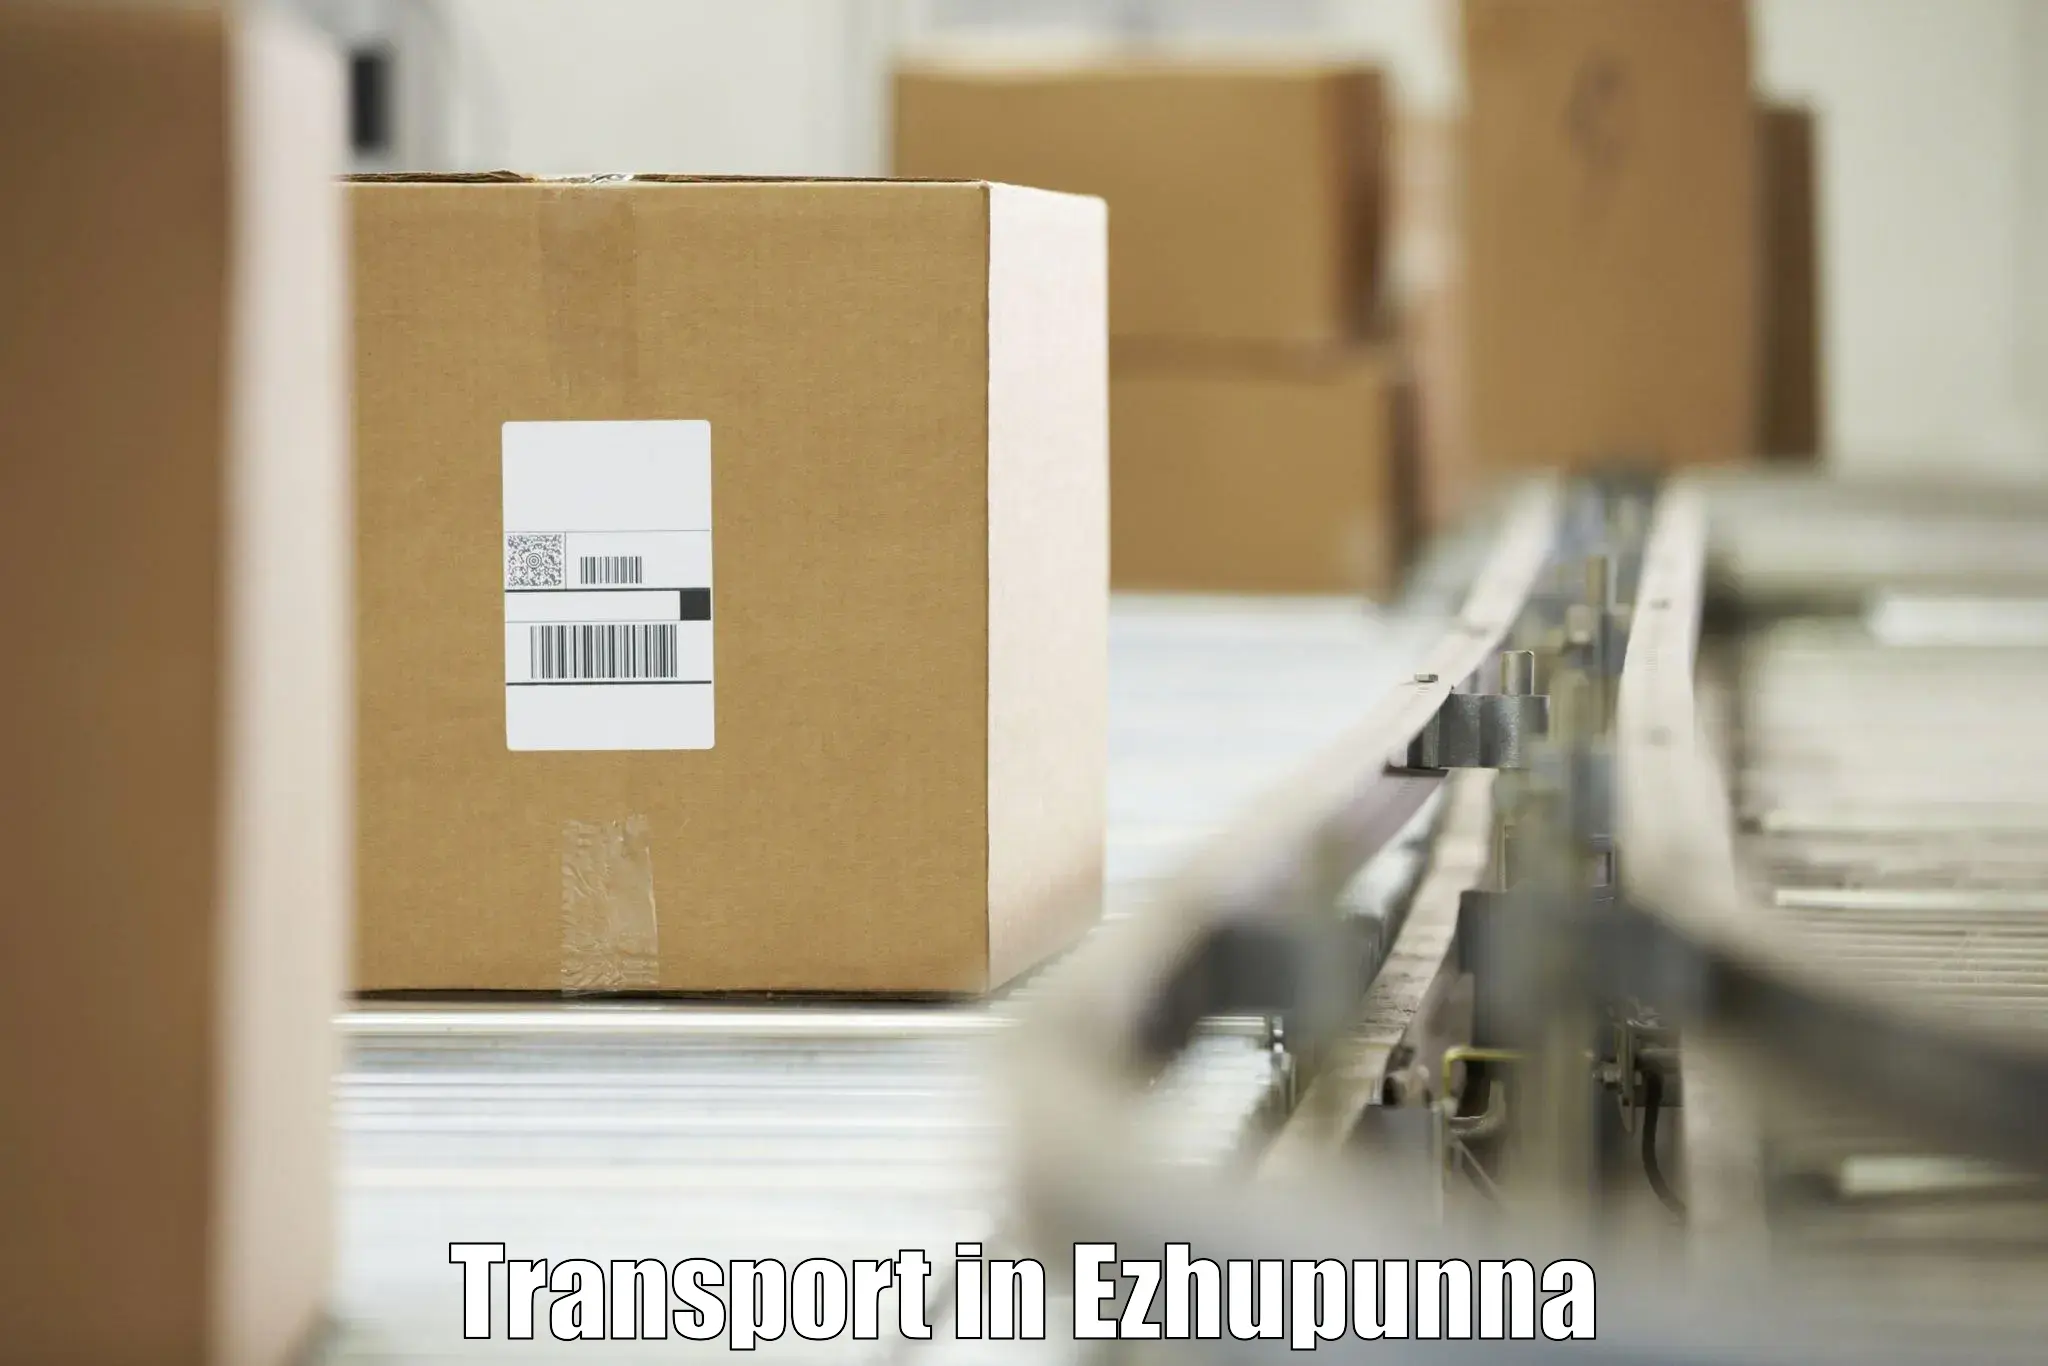 Shipping services in Ezhupunna